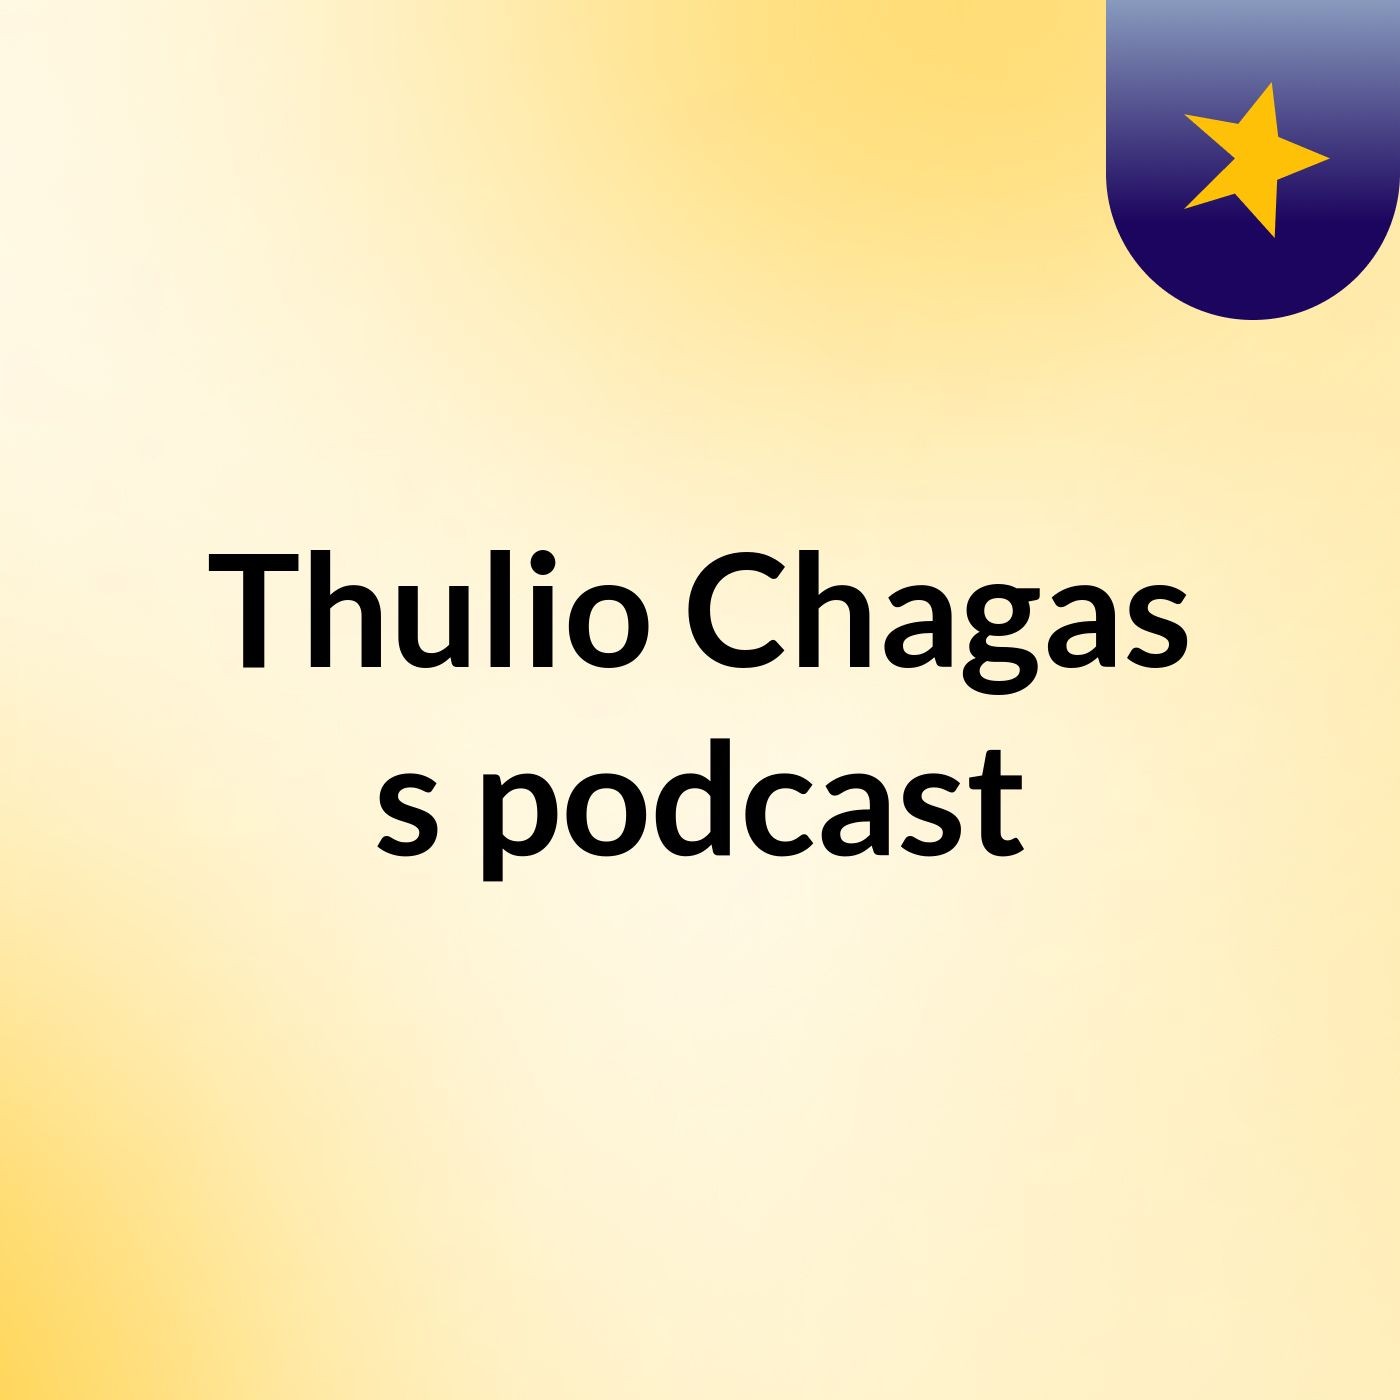 Thulio Chagas's podcast